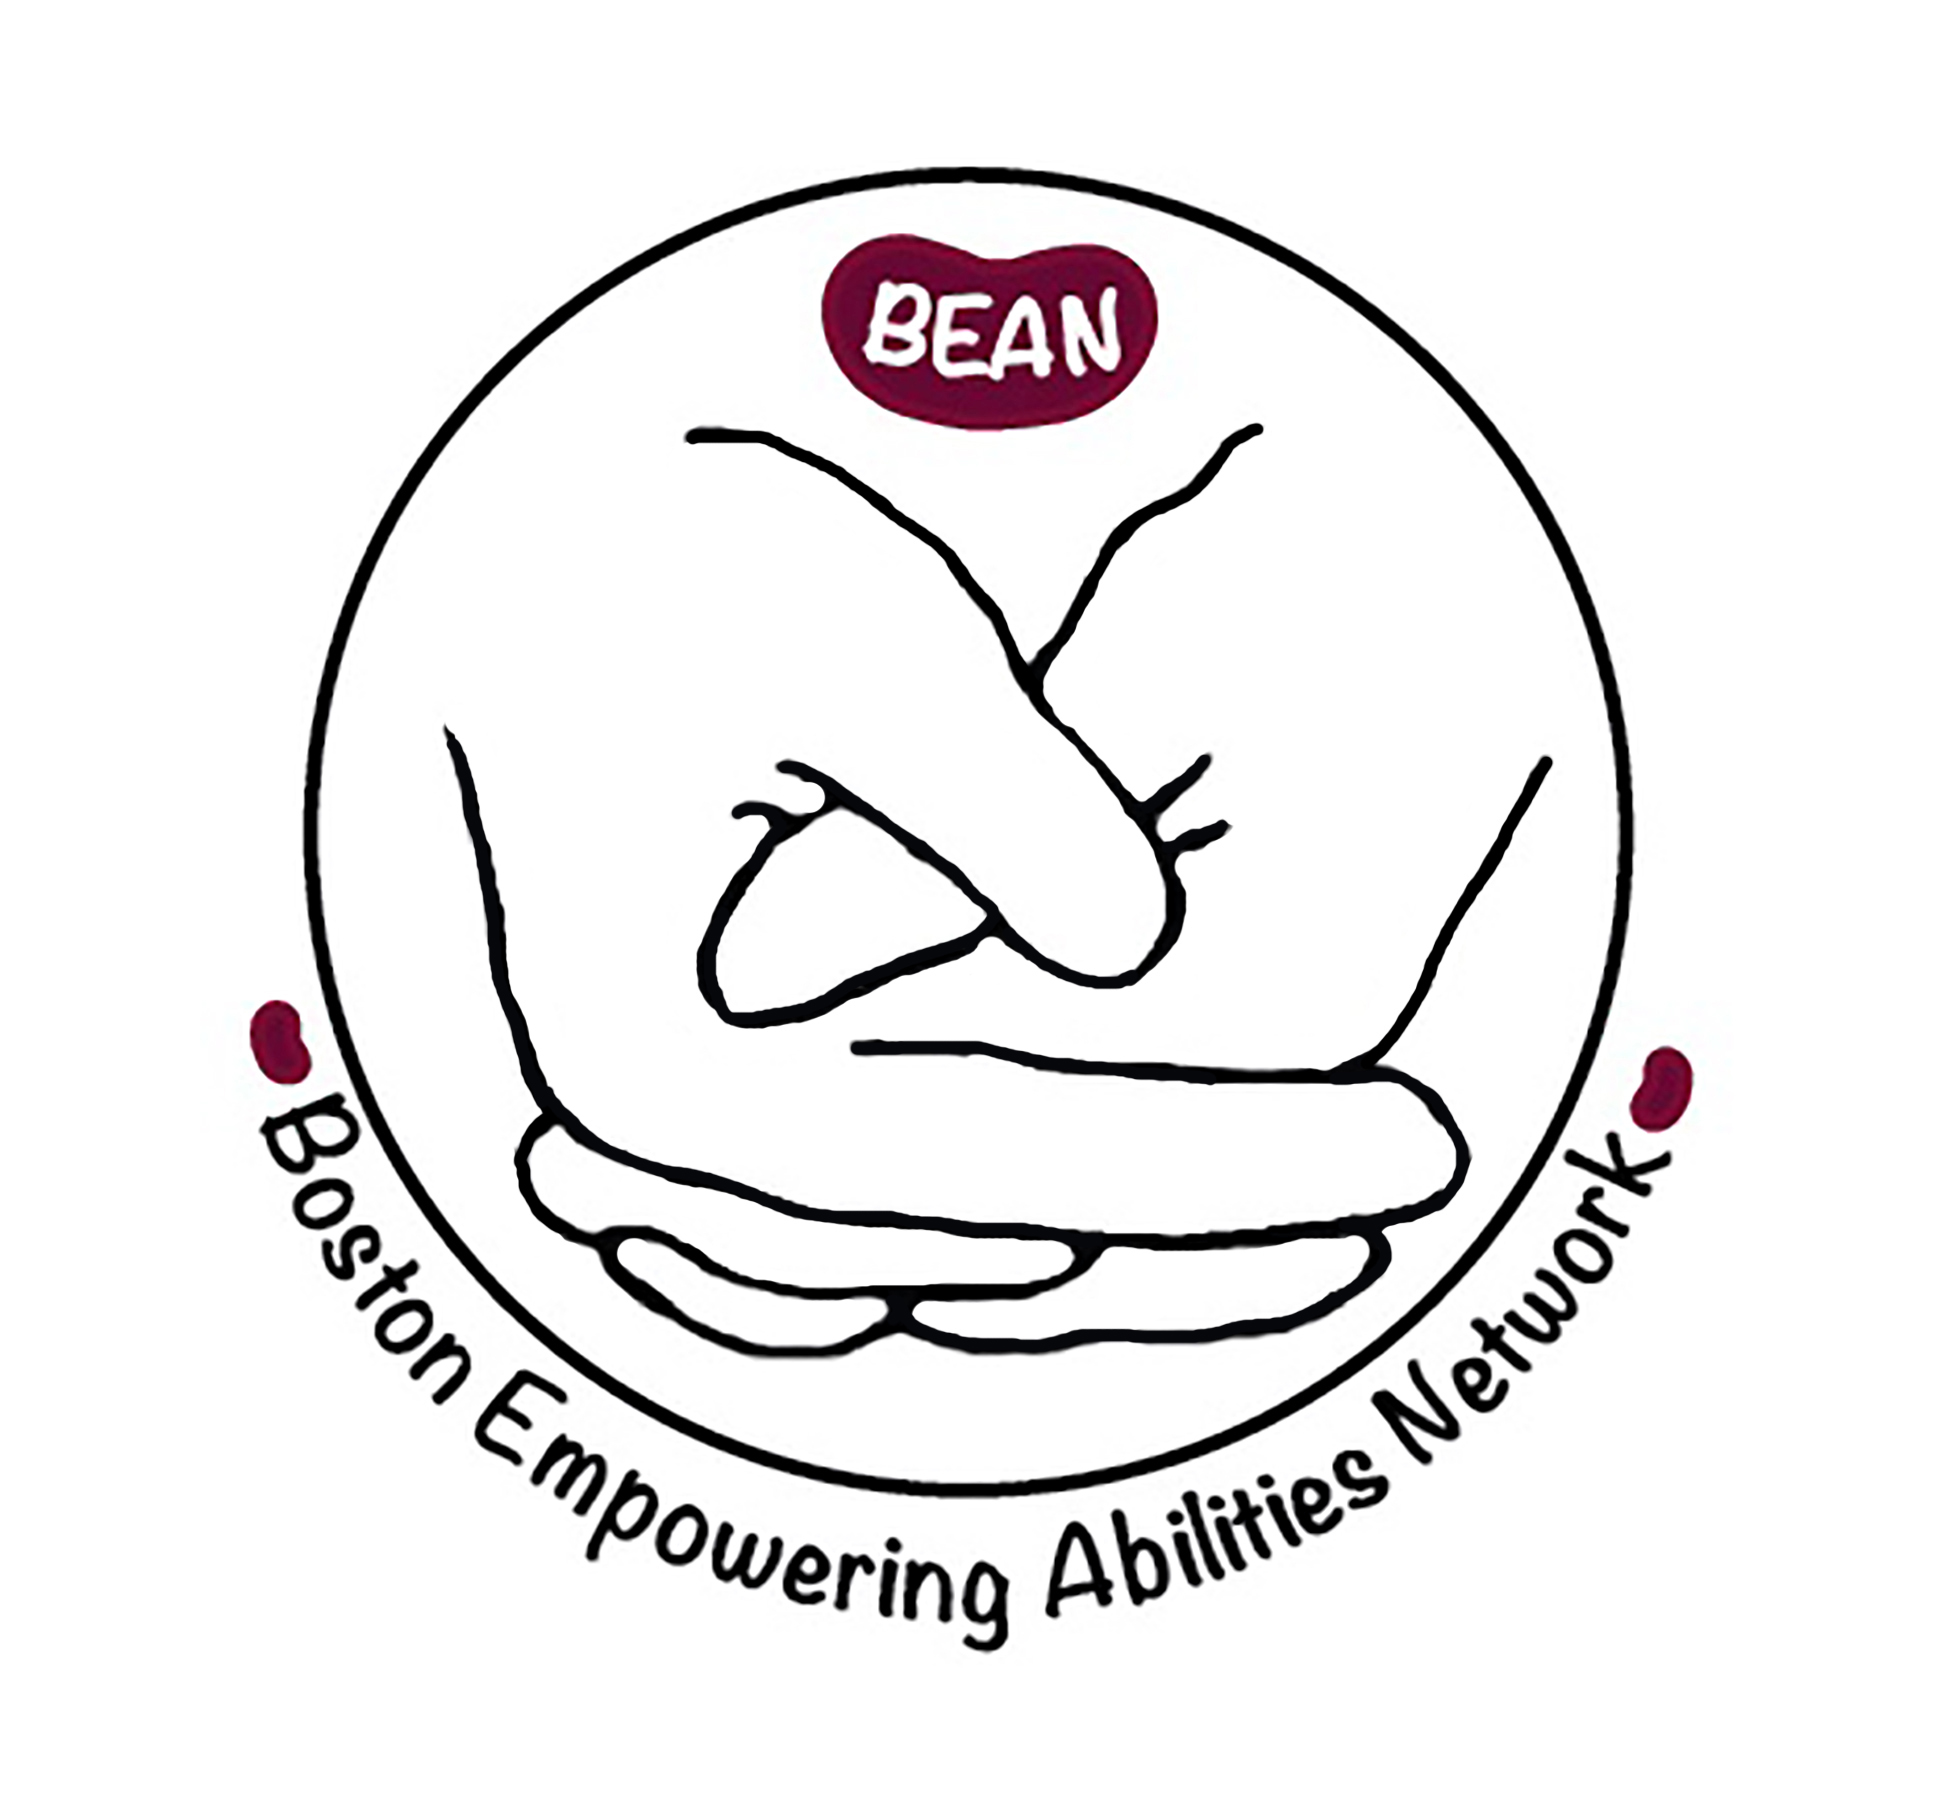 Boston empowering abilities network logo